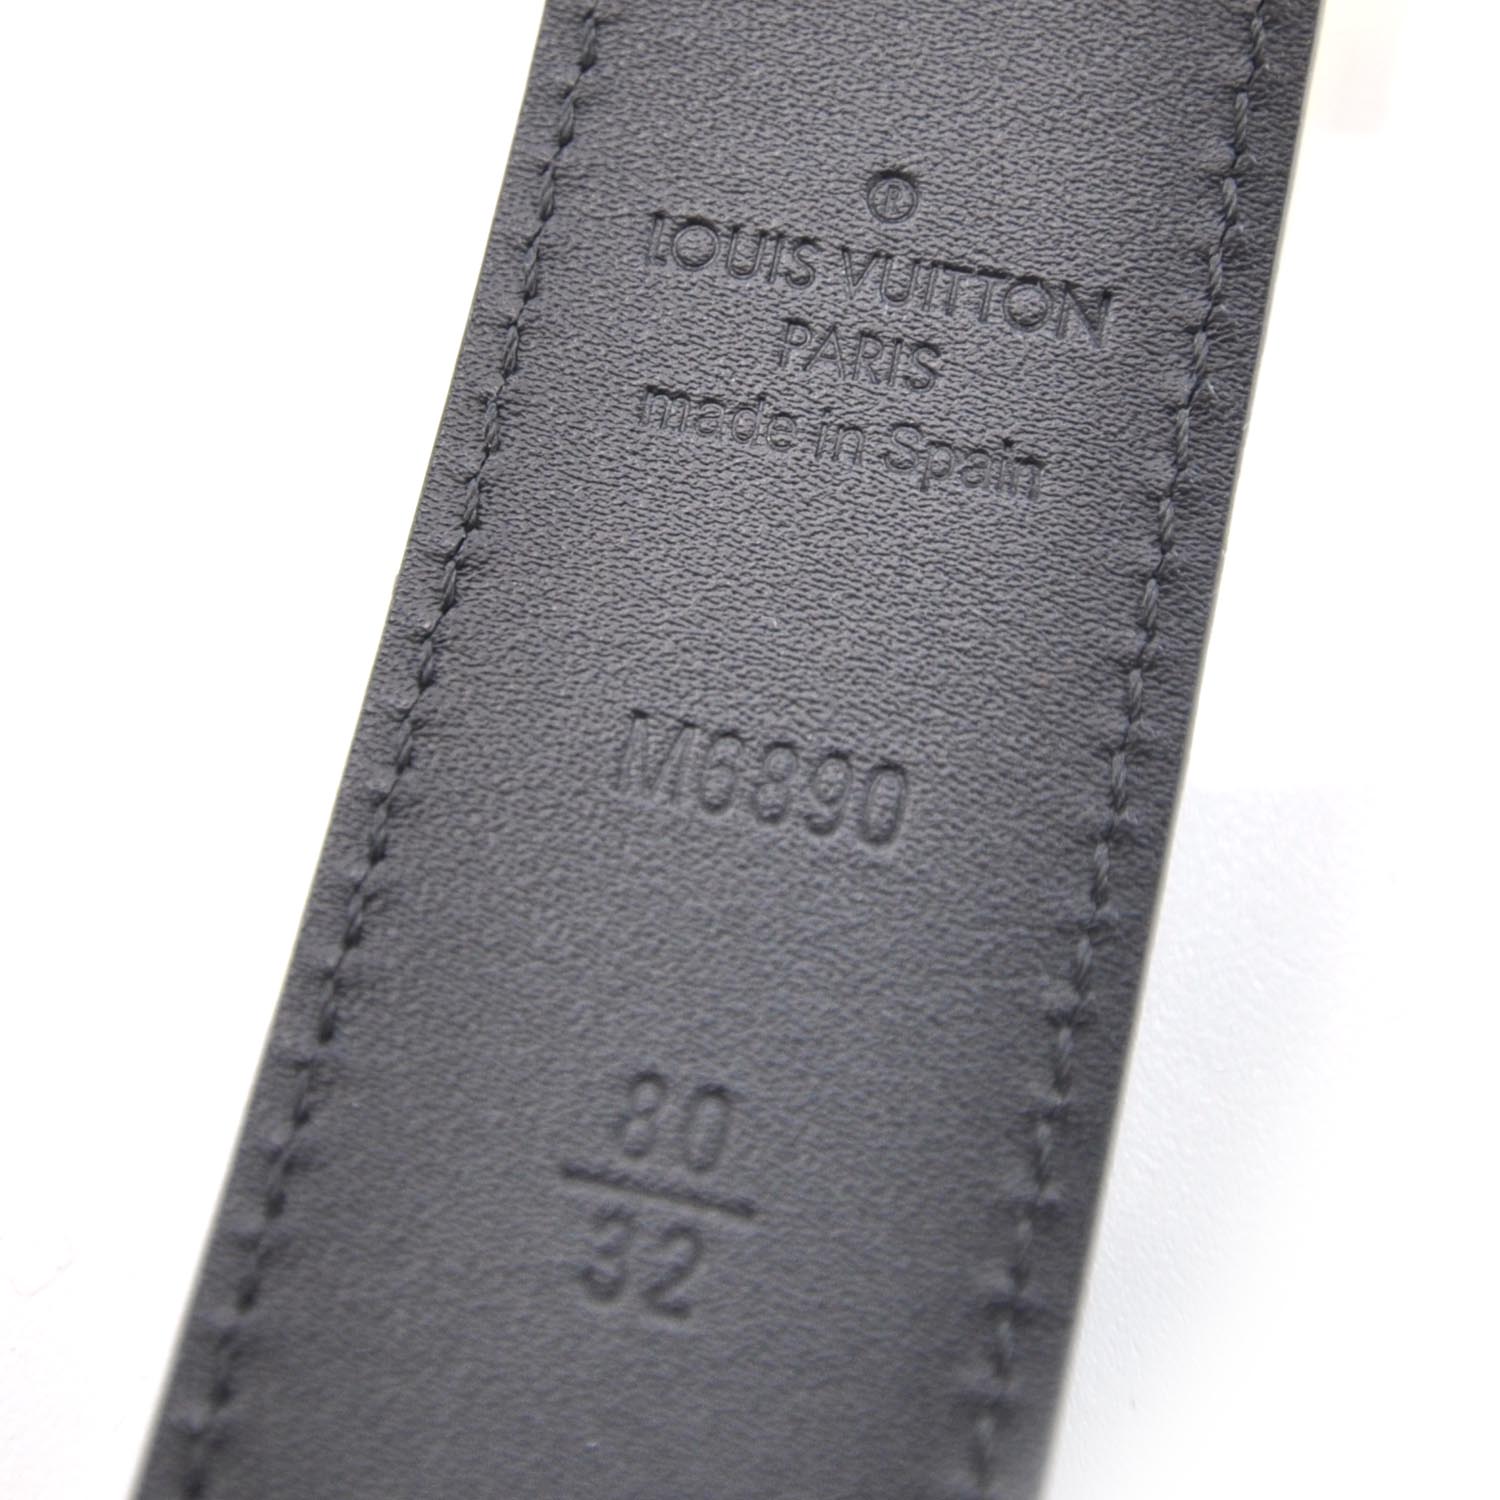 Multi-colours black and white LV belt